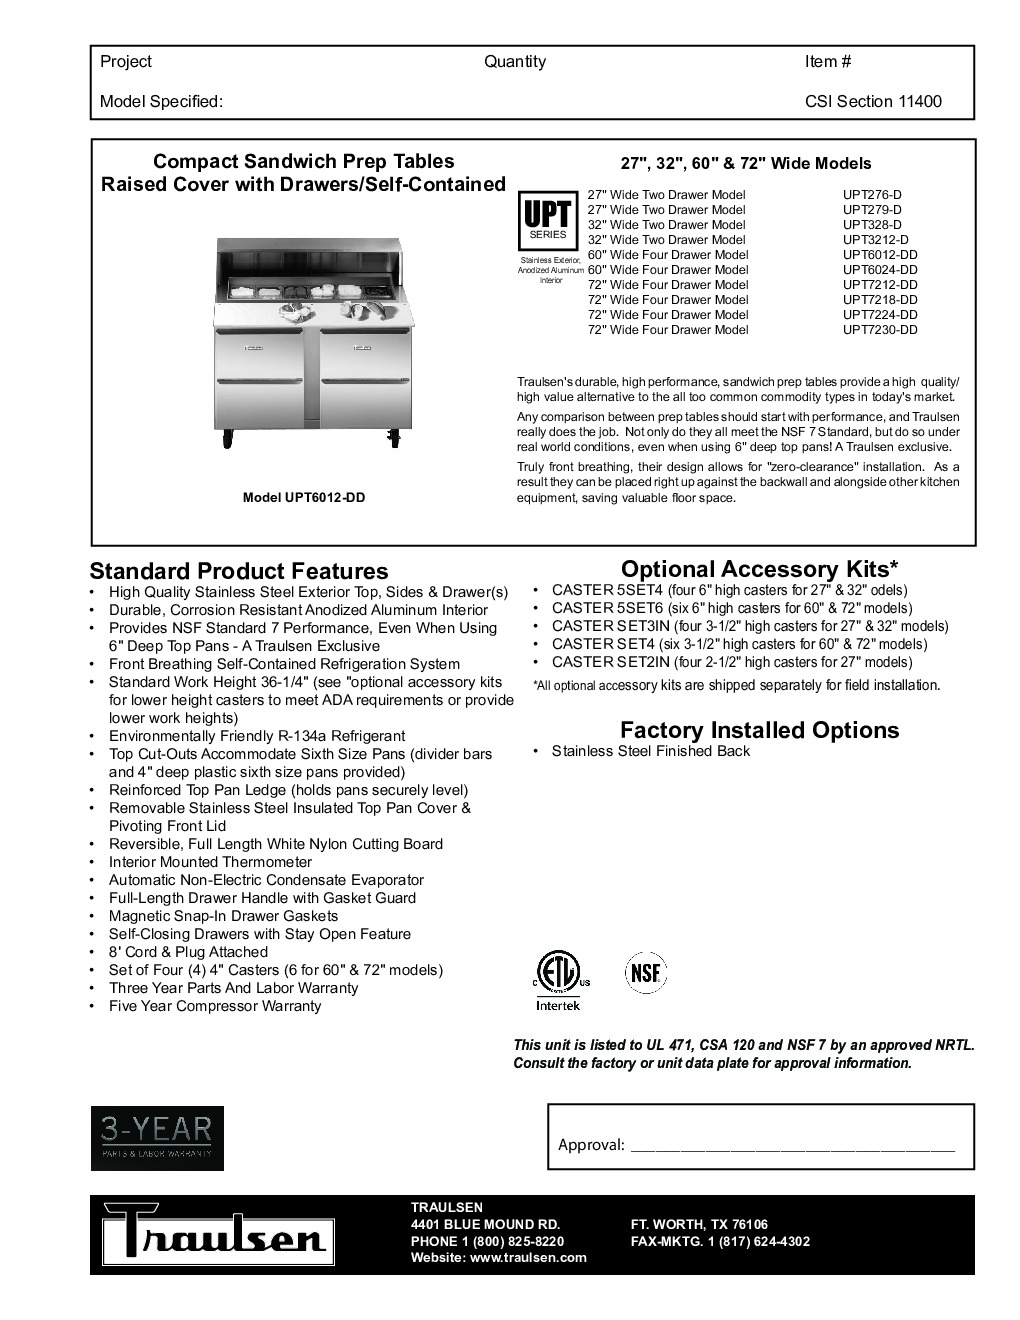 Traulsen UPT7230-DD Sandwich / Salad Unit Refrigerated Counter